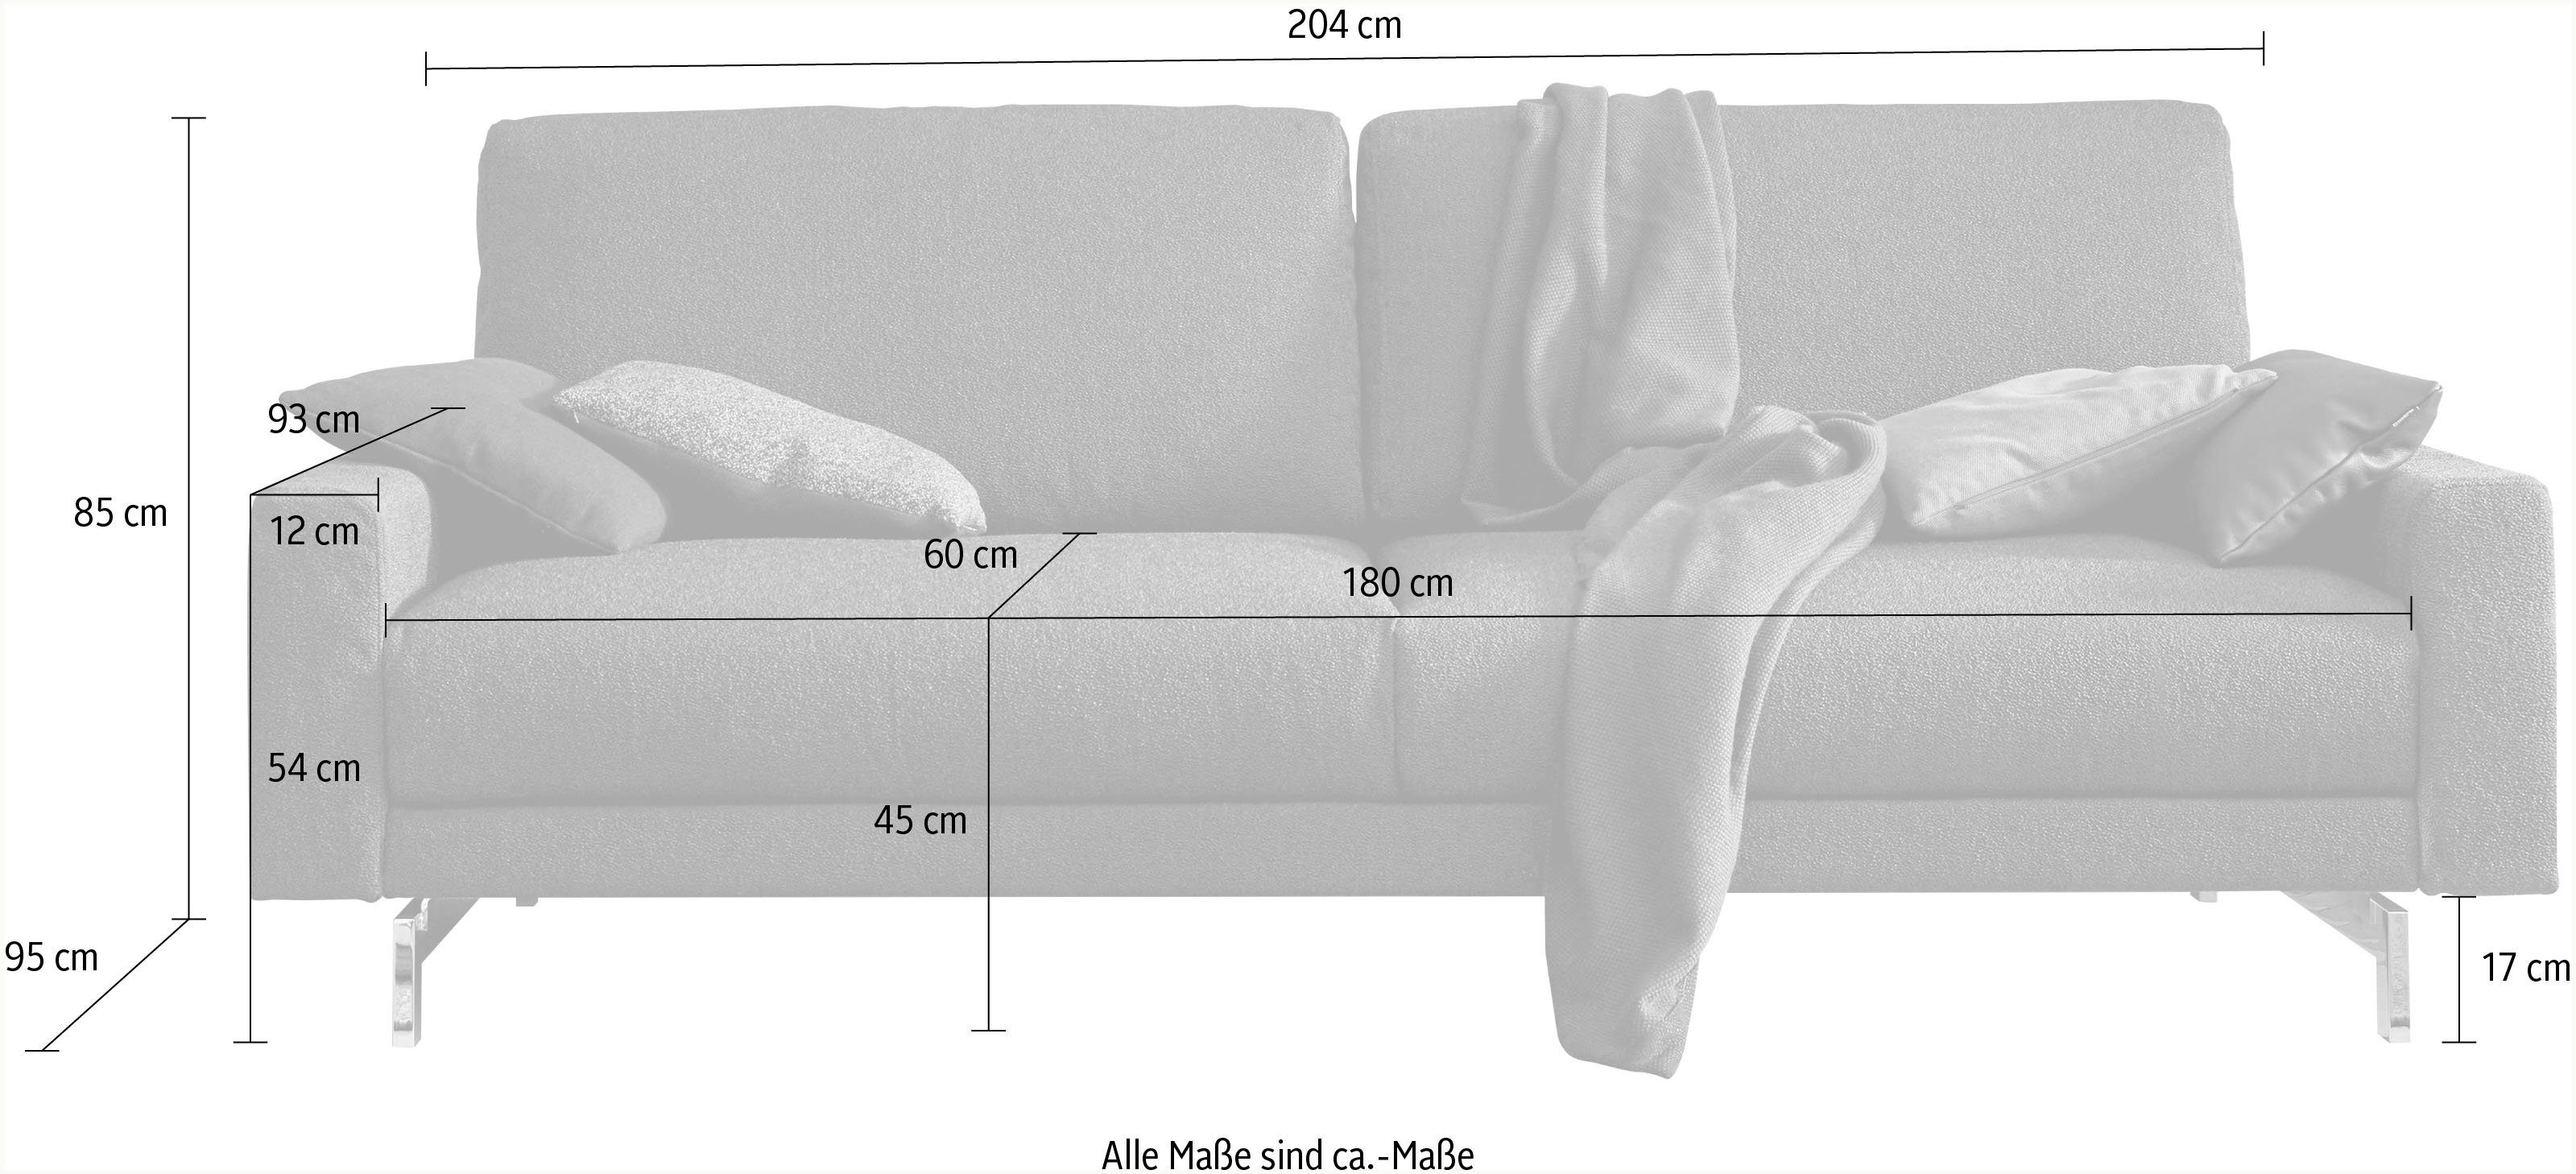 Fuß Breite Armlehne 3-Sitzer hs.450, hülsta glänzend, cm chromfarben niedrig, 204 sofa